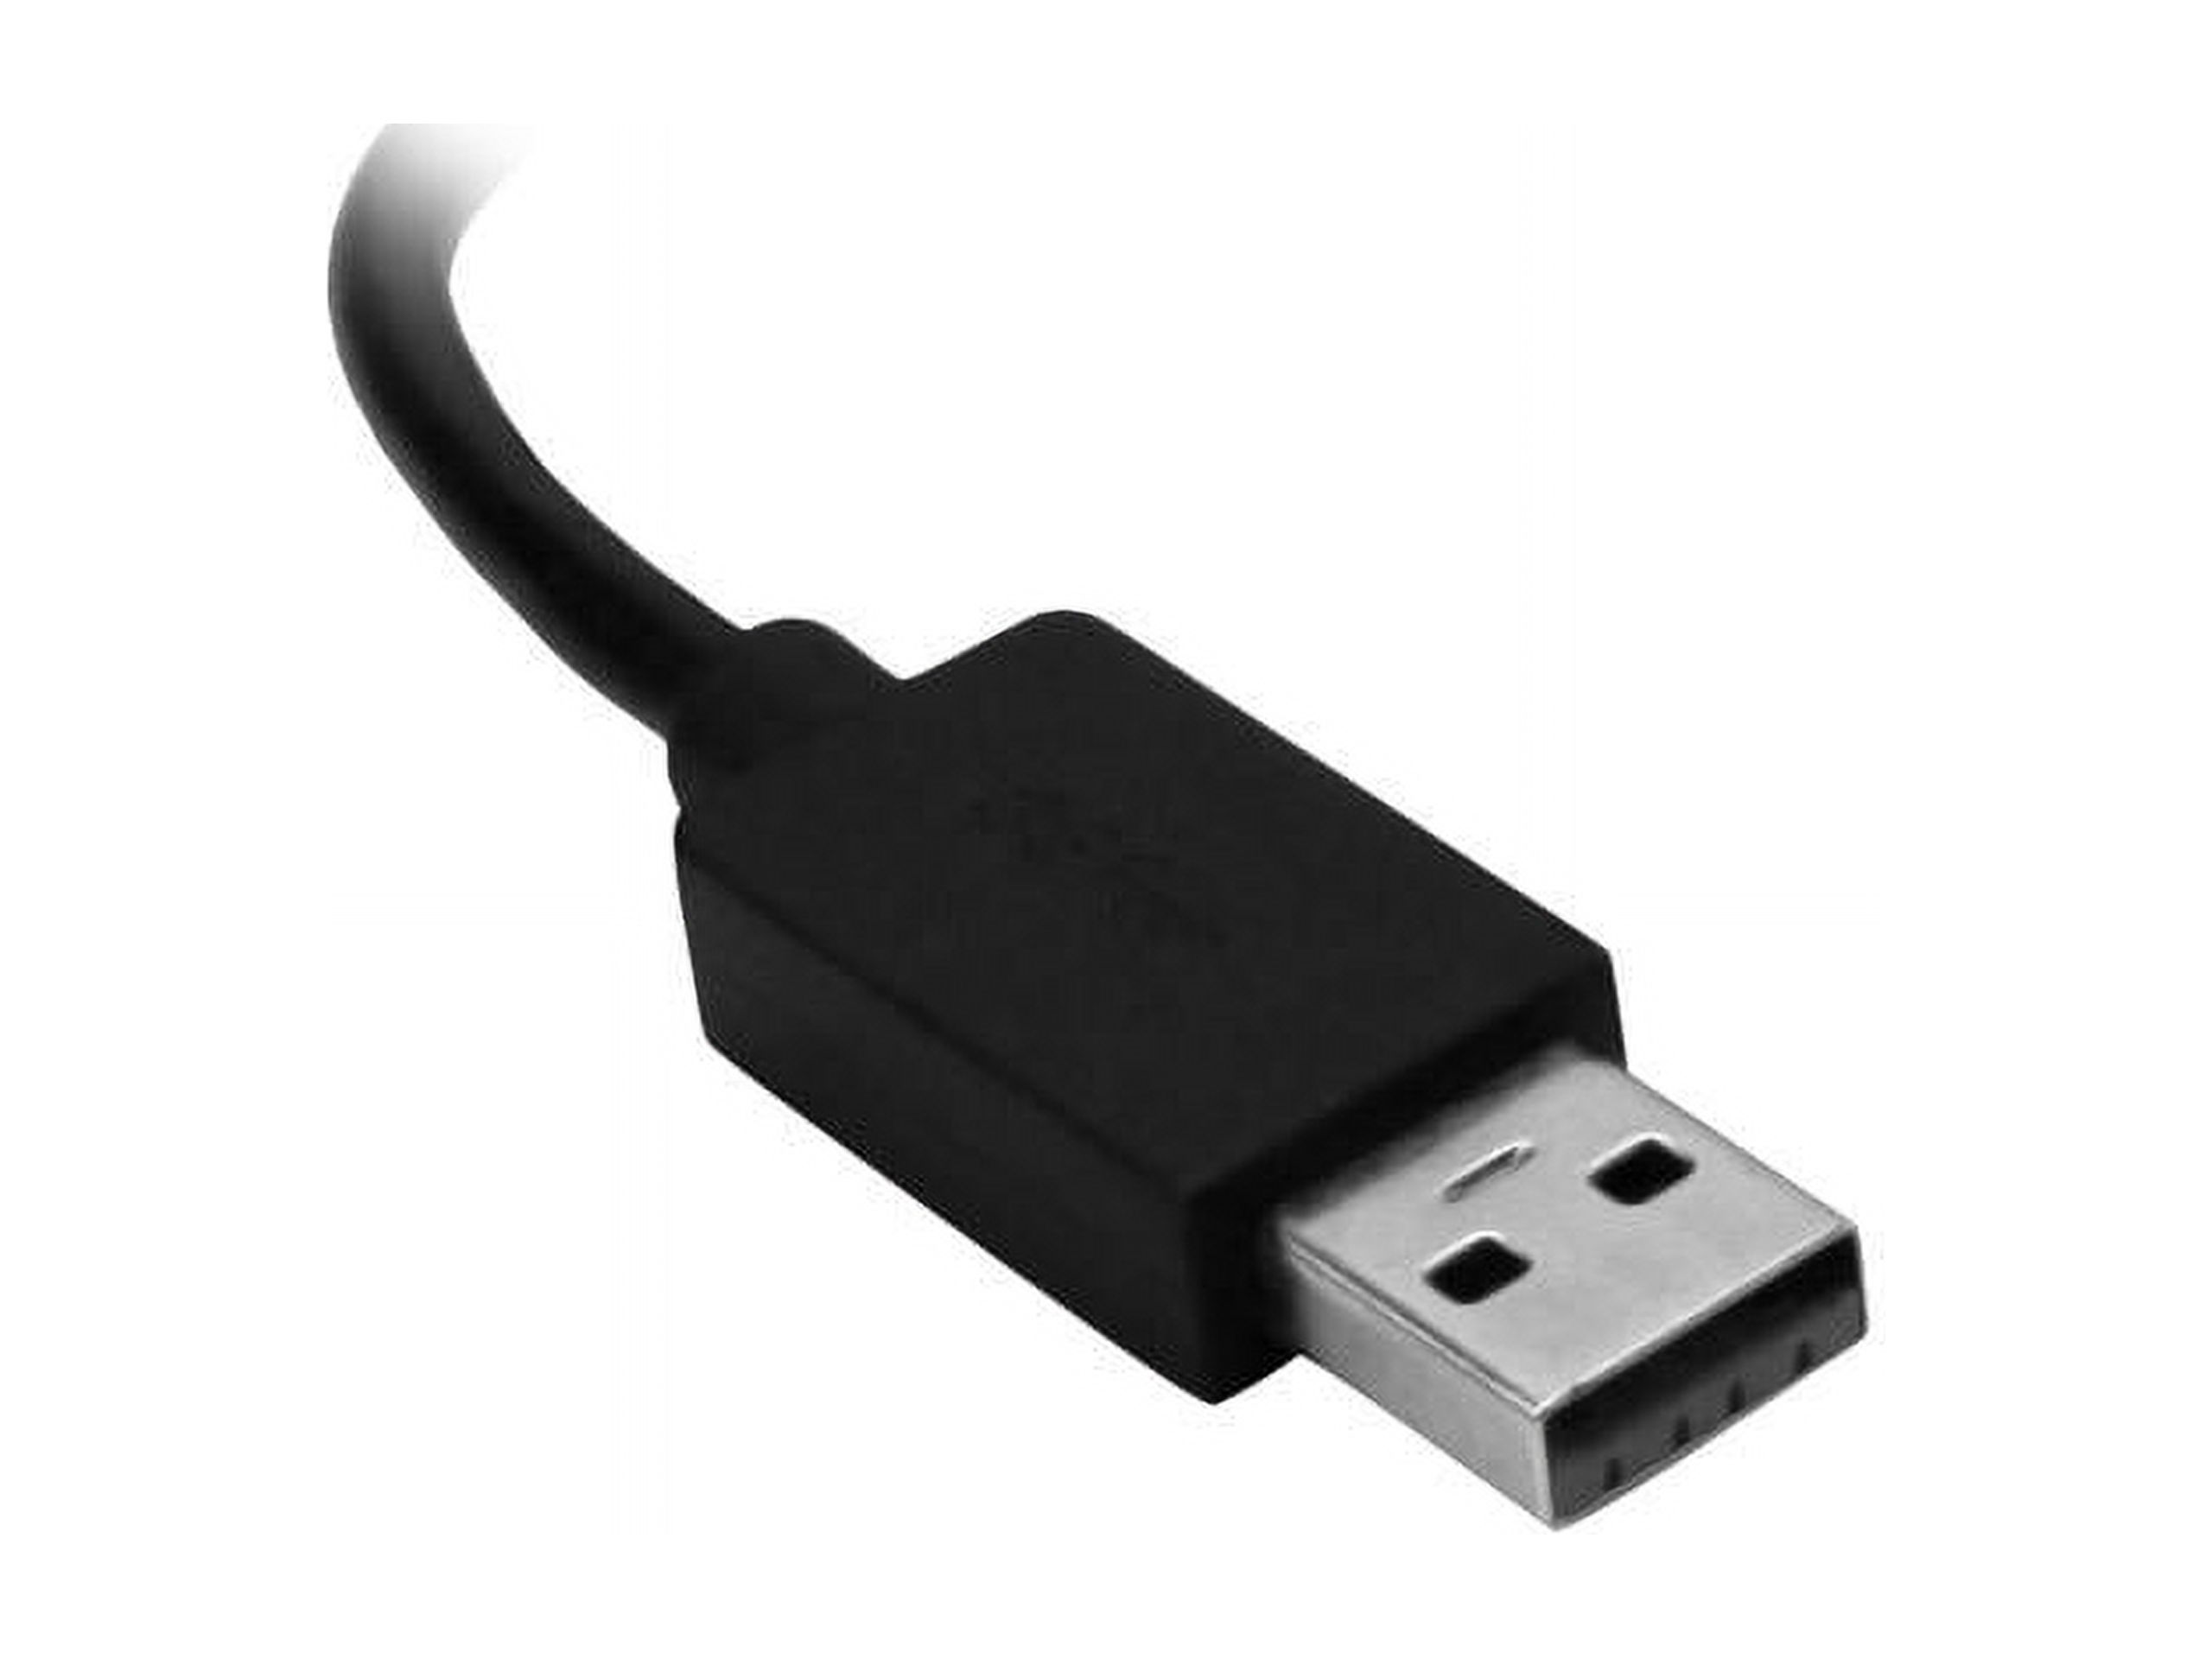 StarTech HB30A3A1CSFS 4 Port USB Hub - USB 3.0 - USB A to 3 x USB A and 1 x USB C - Includes Power Adapter - USB Port Expander - USB Port Hub - image 2 of 5